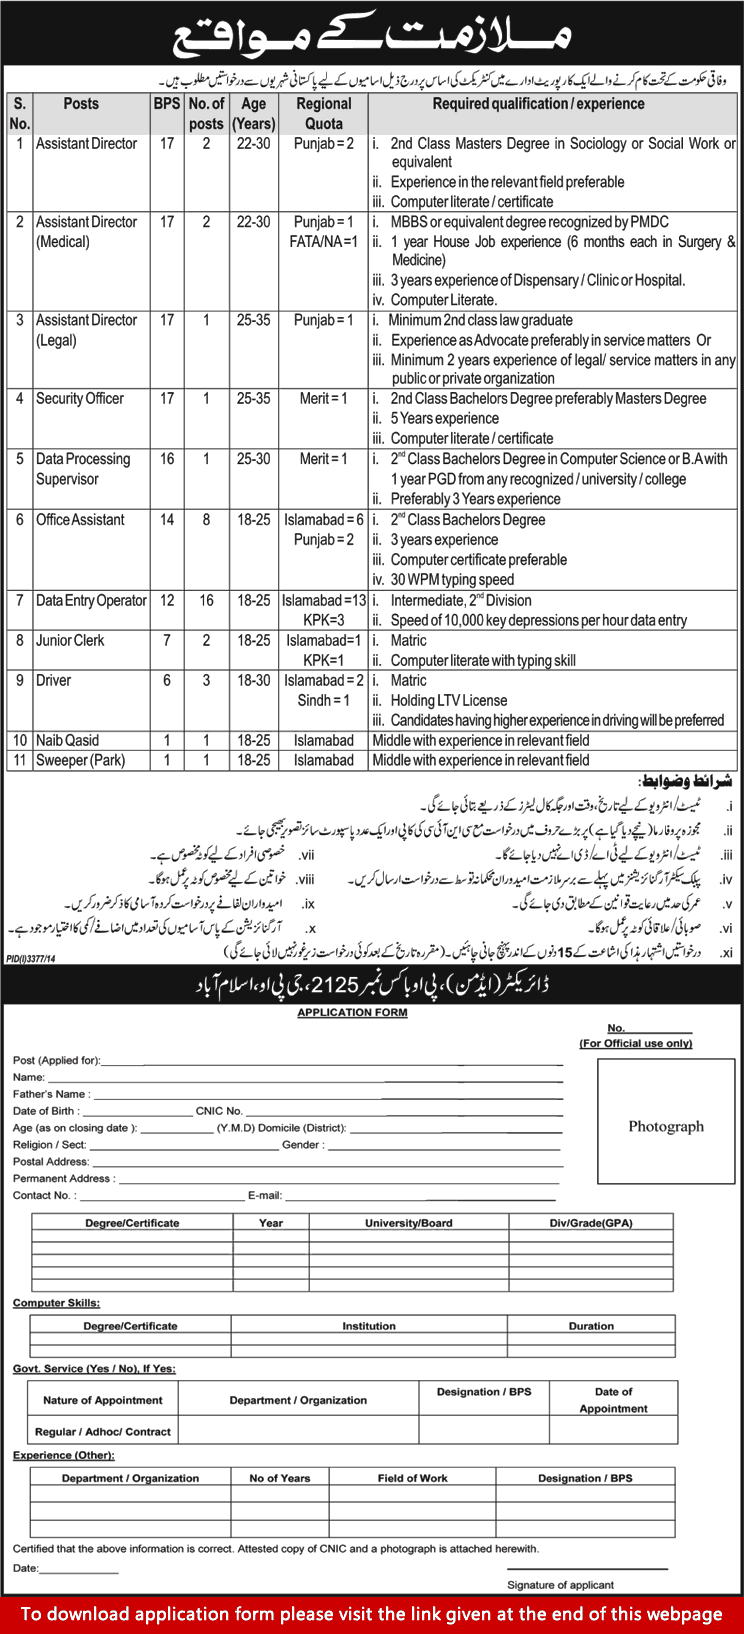 PO Box 2125 GPO Islamabad Jobs 2015 Application Form Download